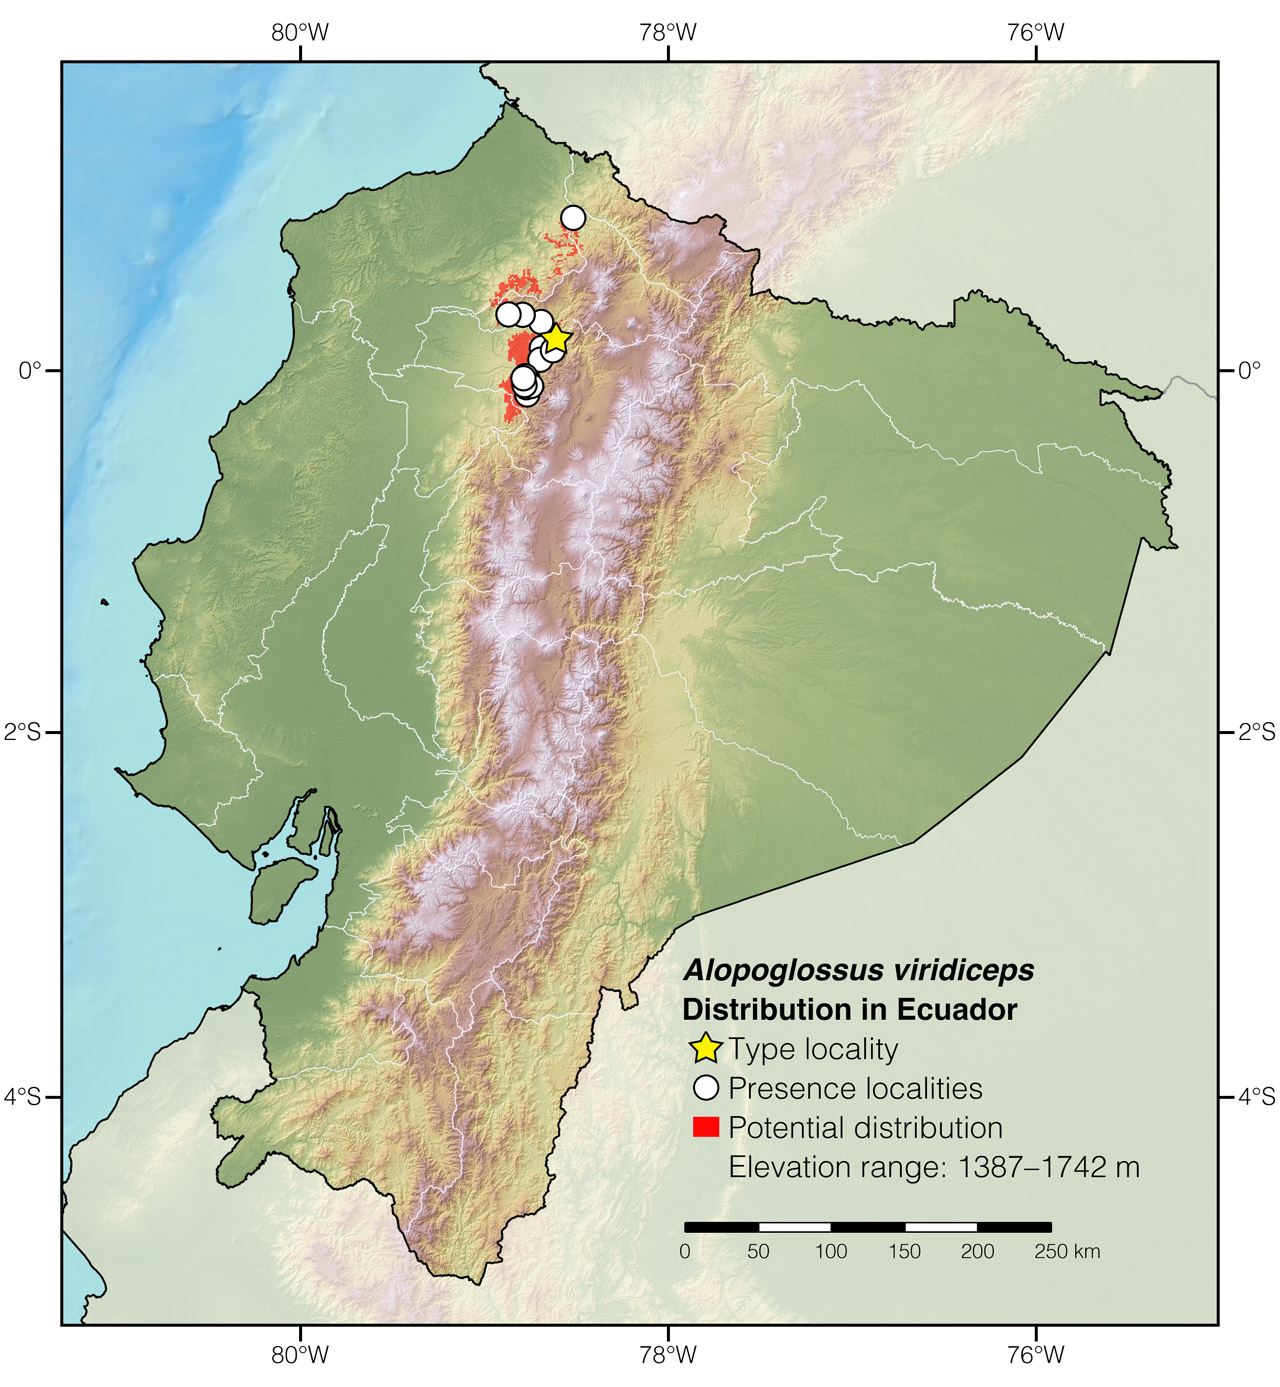 Distribution of Alopoglossus viridiceps in Ecuador